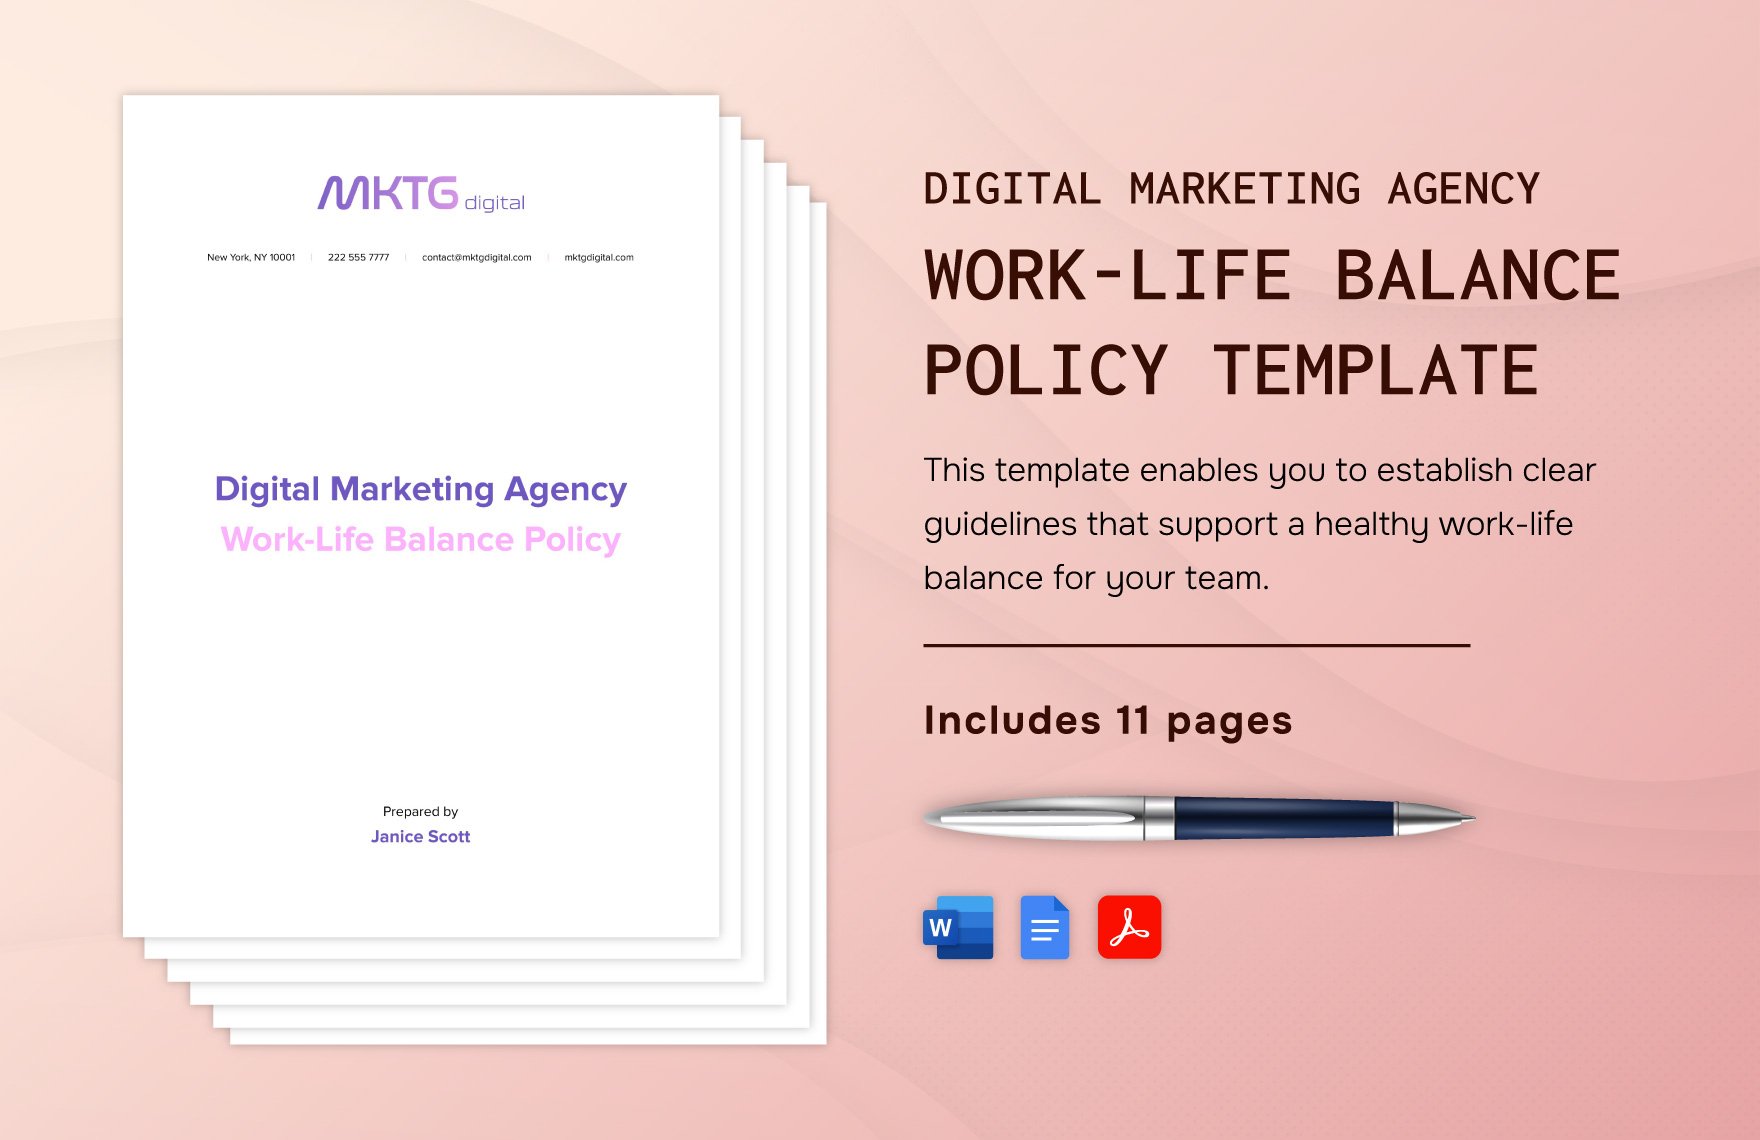 Digital Marketing Agency Work-Life Balance Policy Template